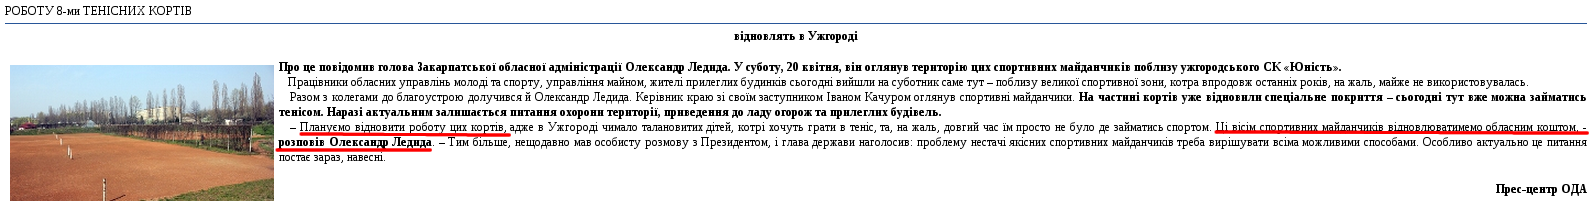 http://www.carpathia.gov.ua/ua/publication/print/4285/public_embed.htm